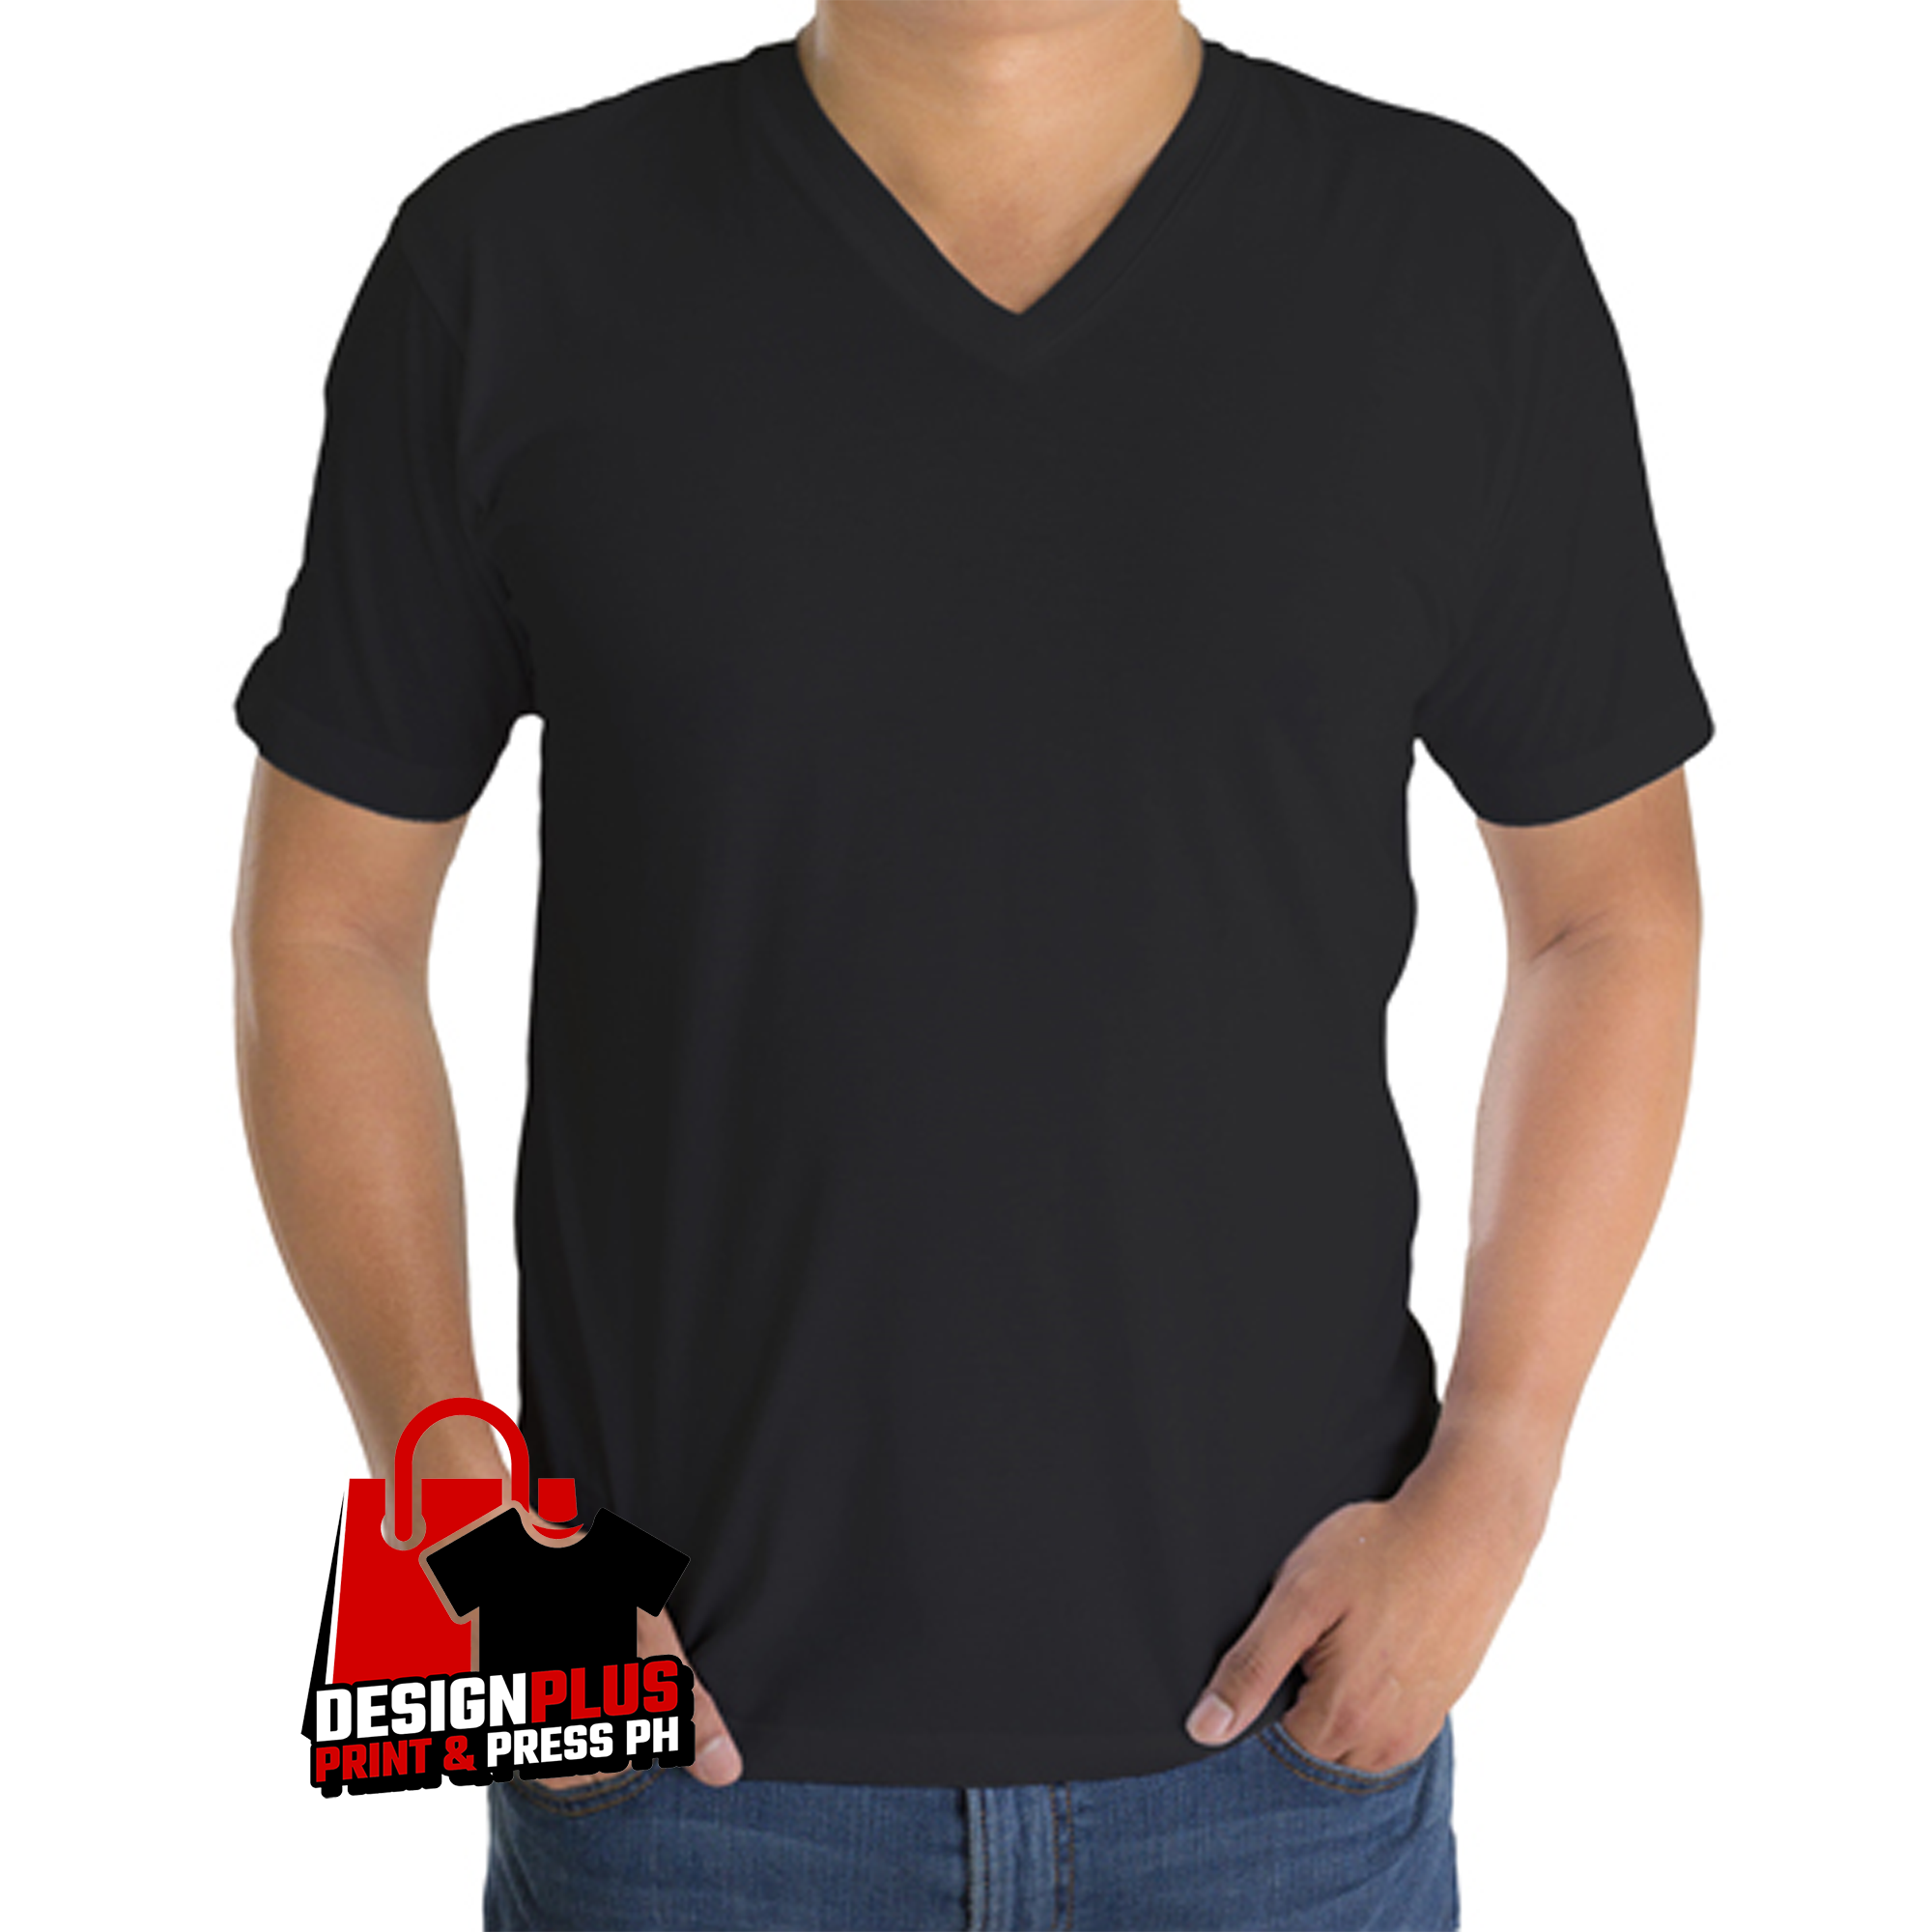 Designplus Active Life Plain V Neck Unisex T Shirt Black Shirt Tshirt Plain Tee Tees Mens 9585